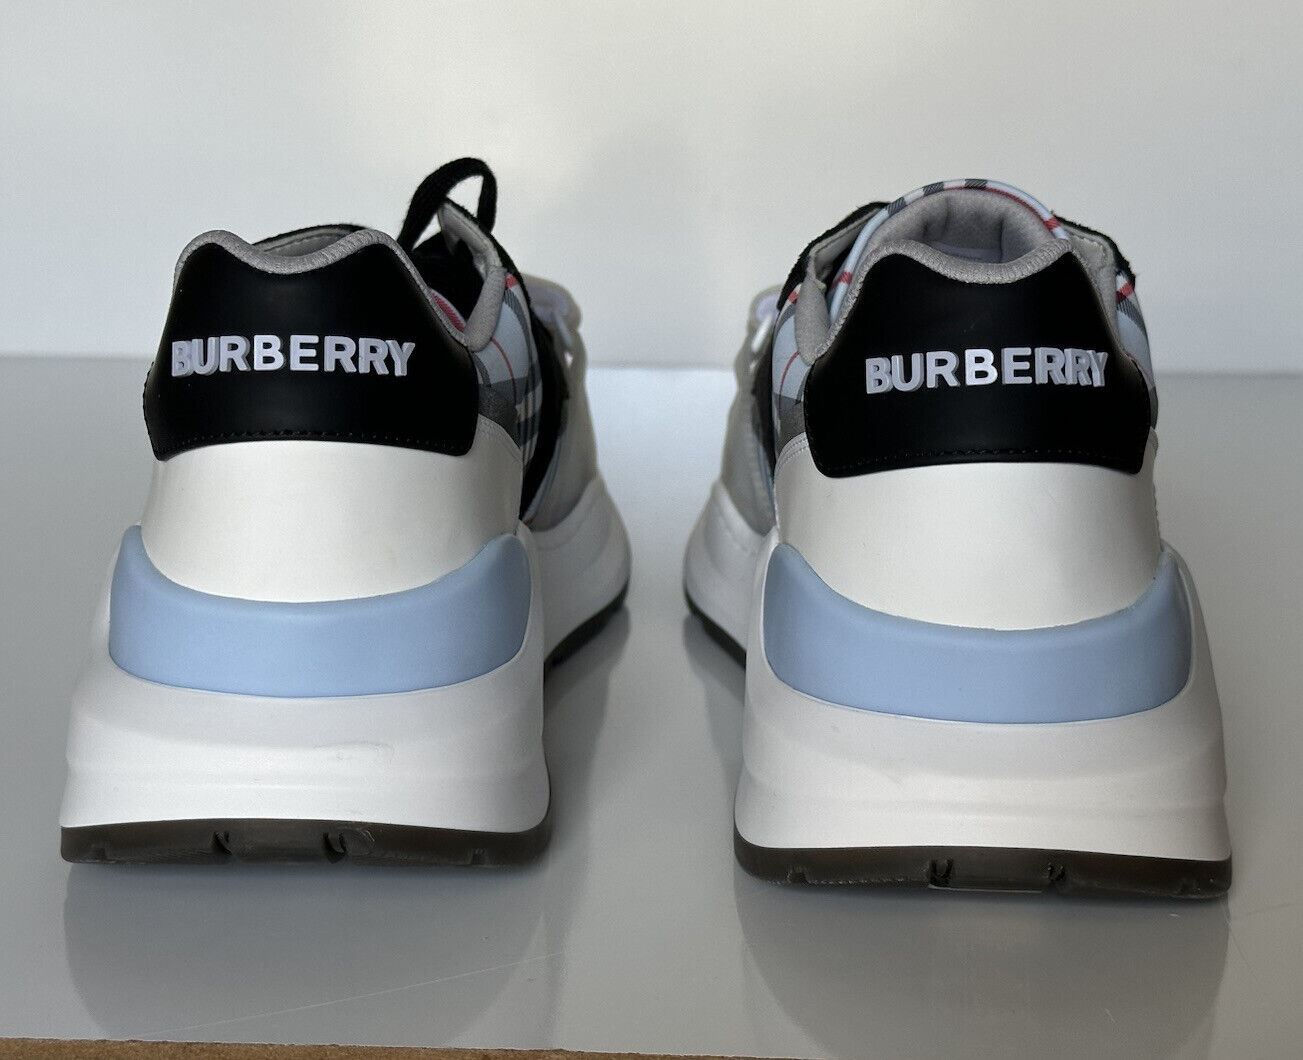 Мужские кроссовки Burberry Ramsey Pale Blue за 790 долларов США 13 США (46 евро) 8051415 IT 